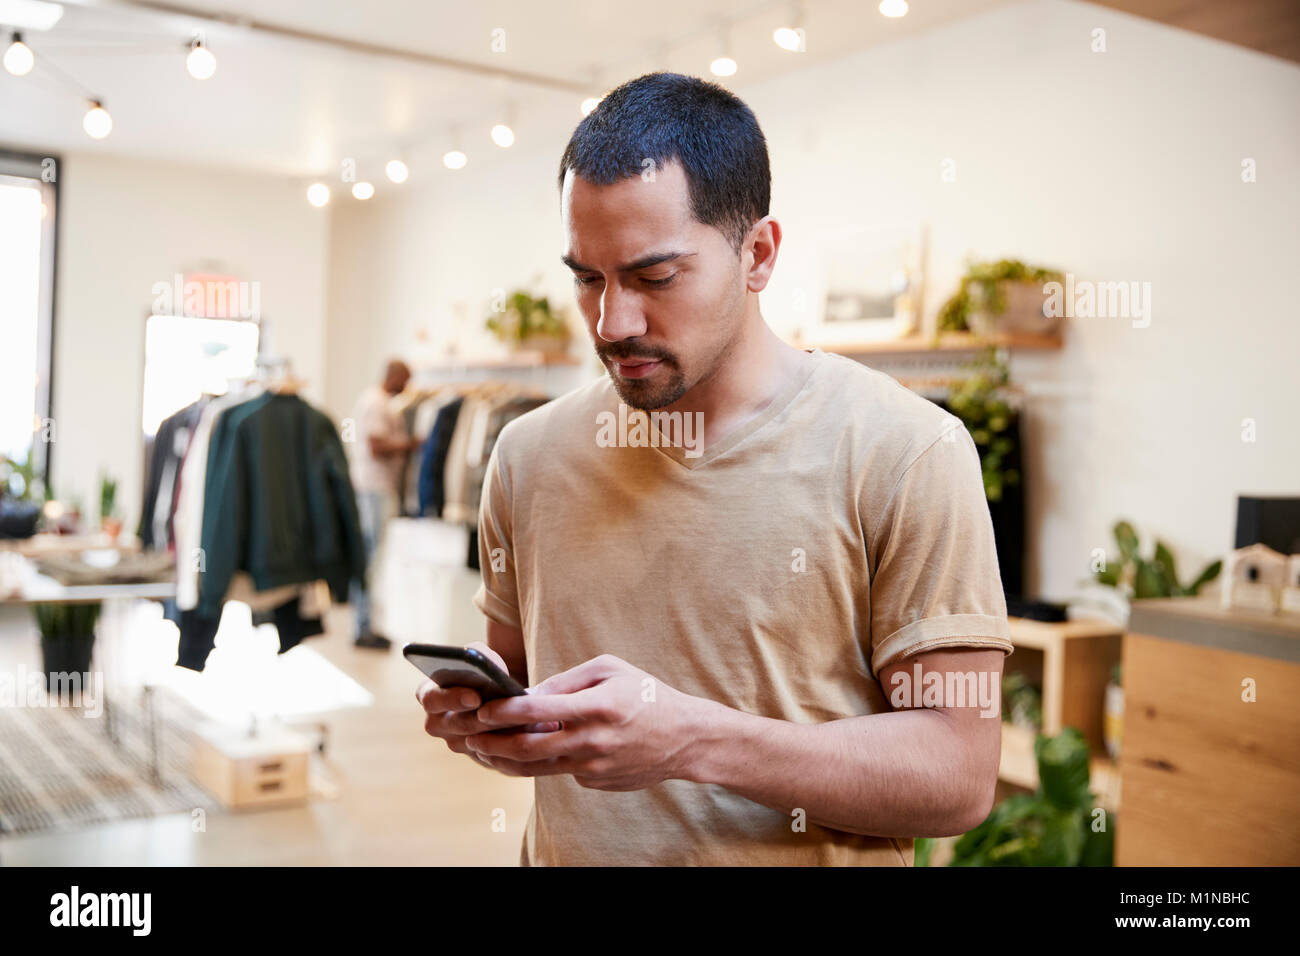 Young Hispanic man using smartphone dans un magasin de vêtements Banque D'Images